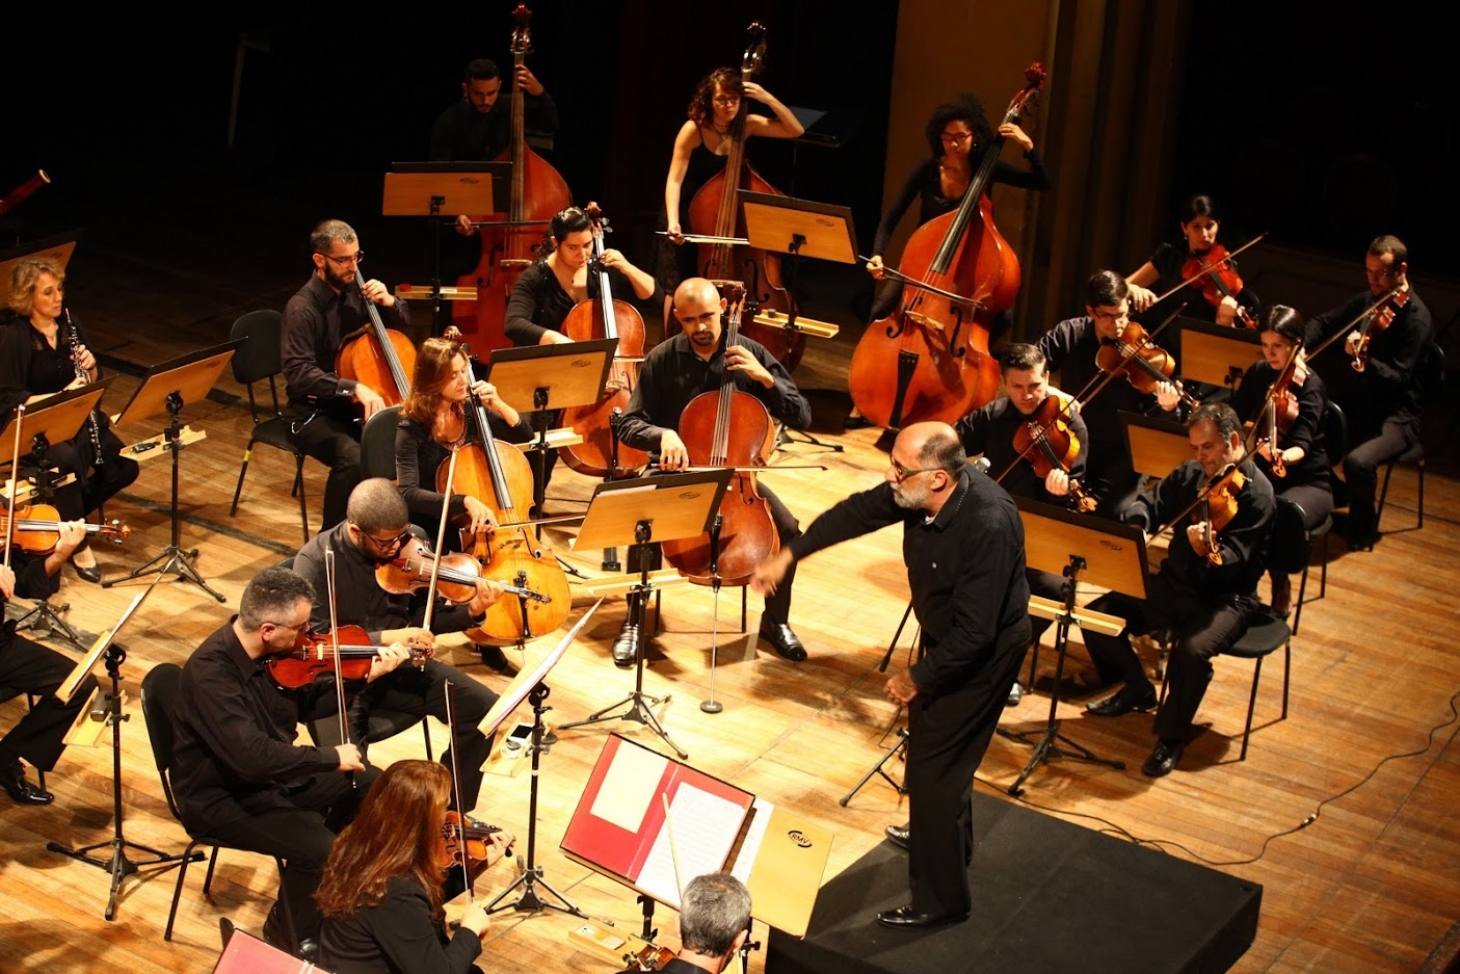 Teatro Municipal de Santos recebe cinco orquestras sinfônicas | Jornal da Orla